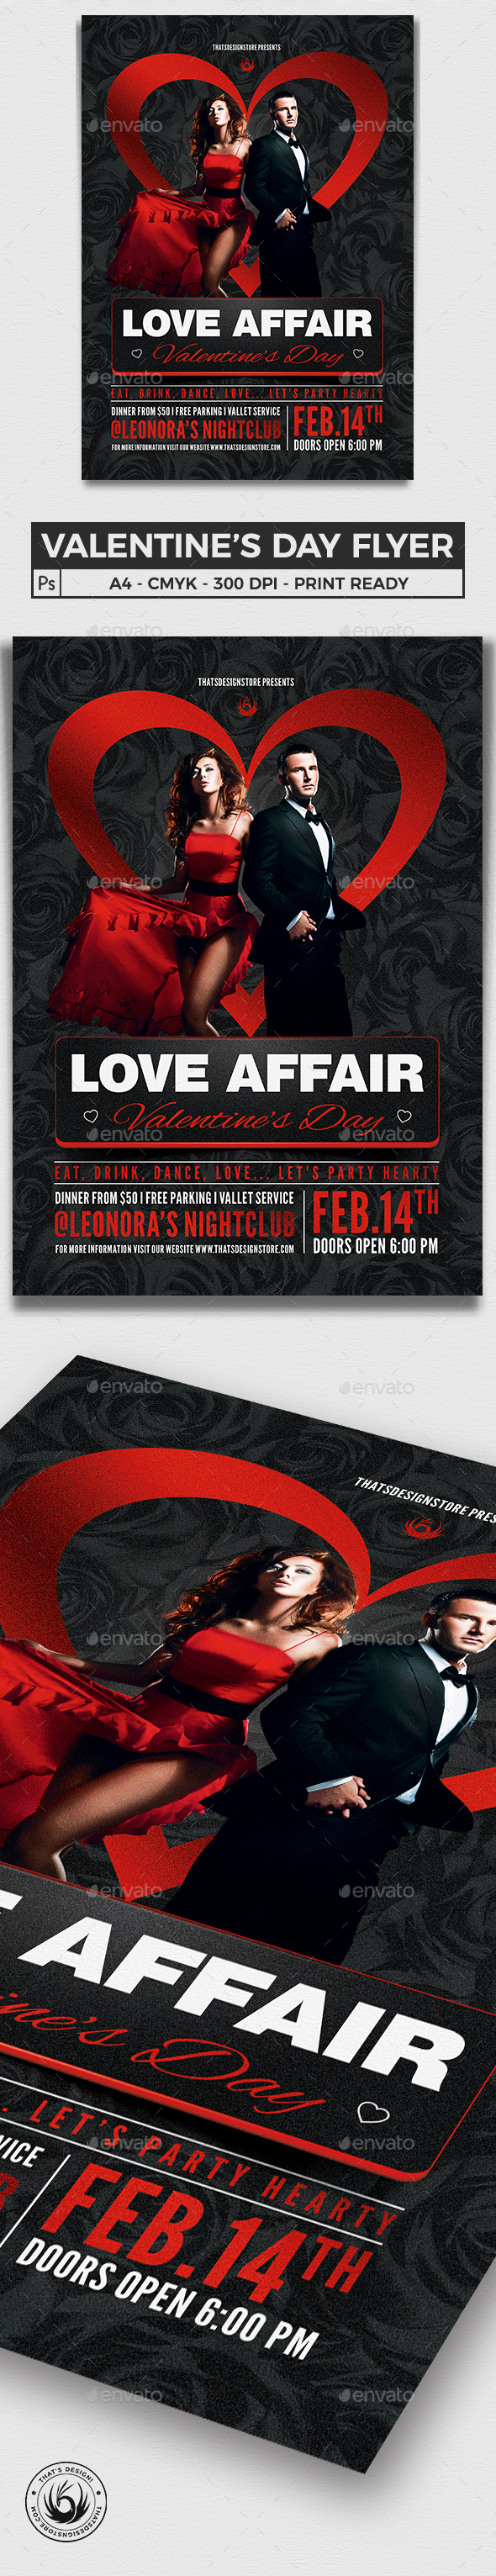 Valentines Day Flyer Template V1